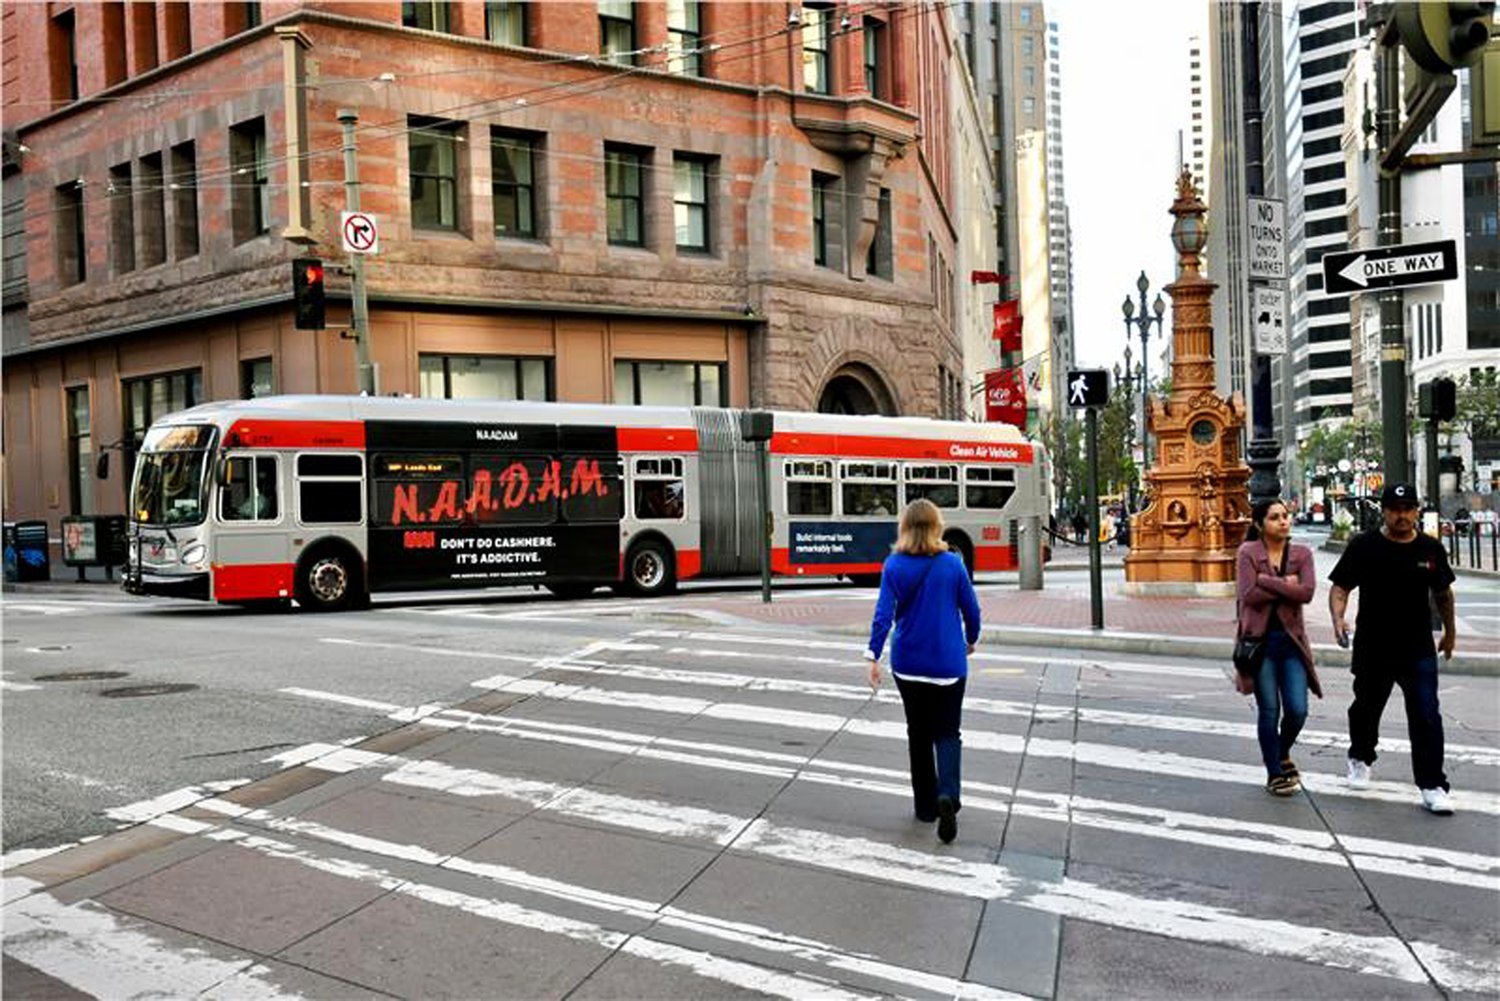 San-Francisco-Bus-Ultra-Super-King-OOH-Marketing-Campaign.jpg